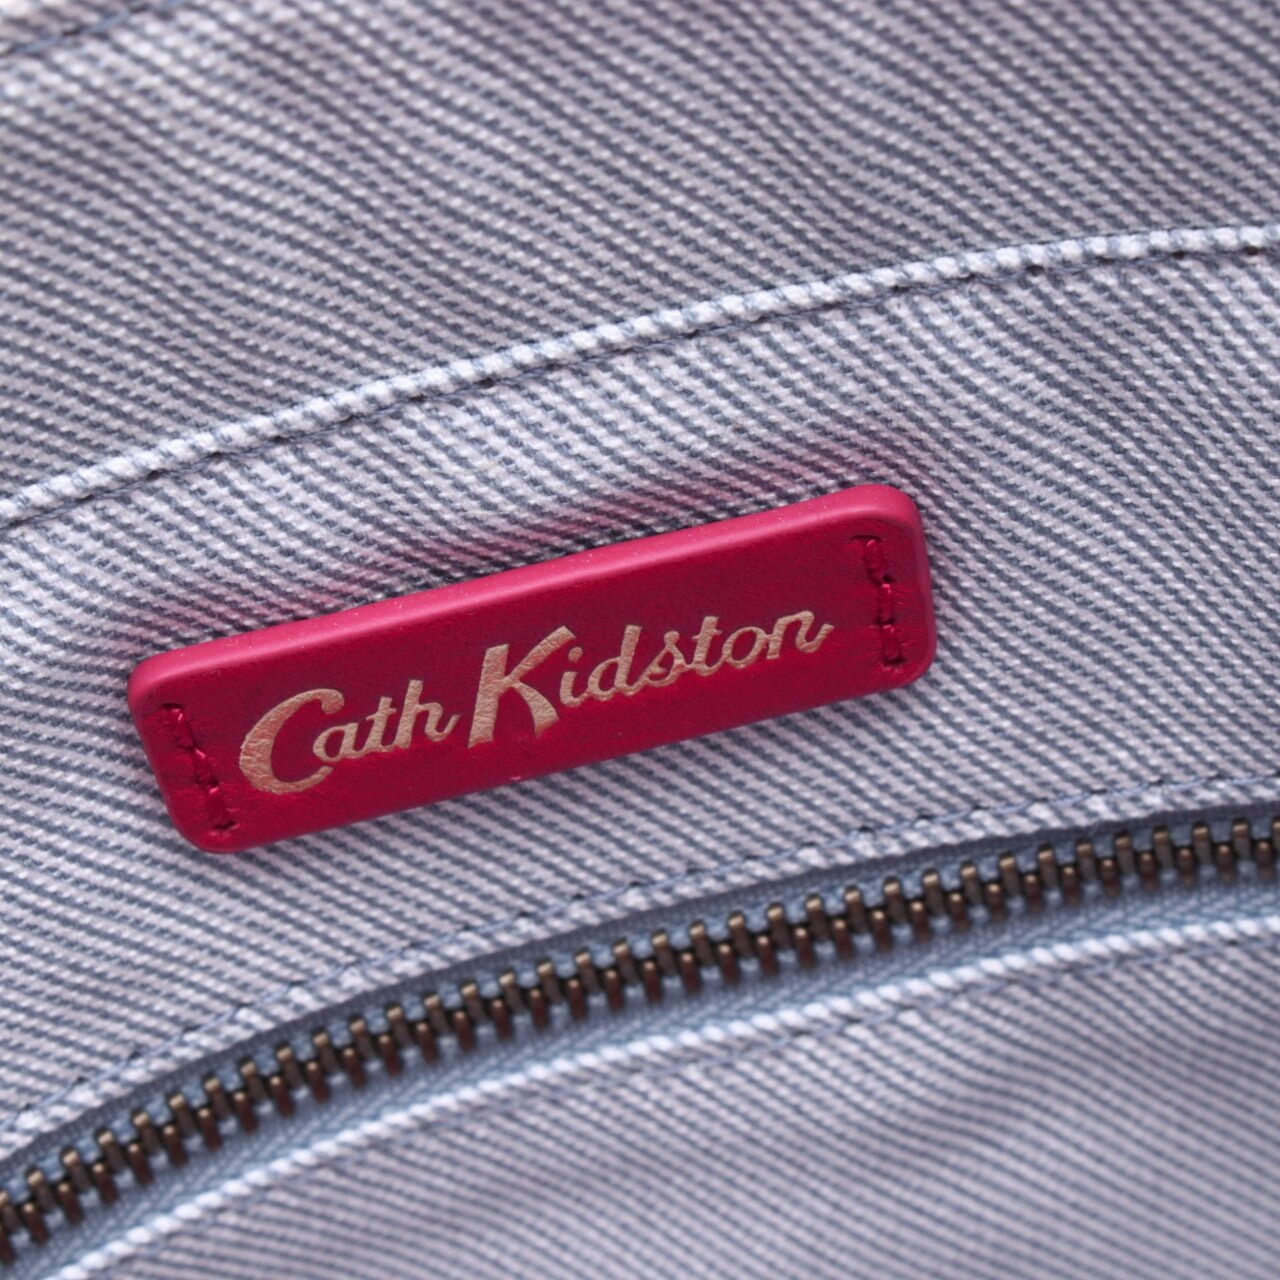 Cath Kidston Freston Rose Red Tote Bag